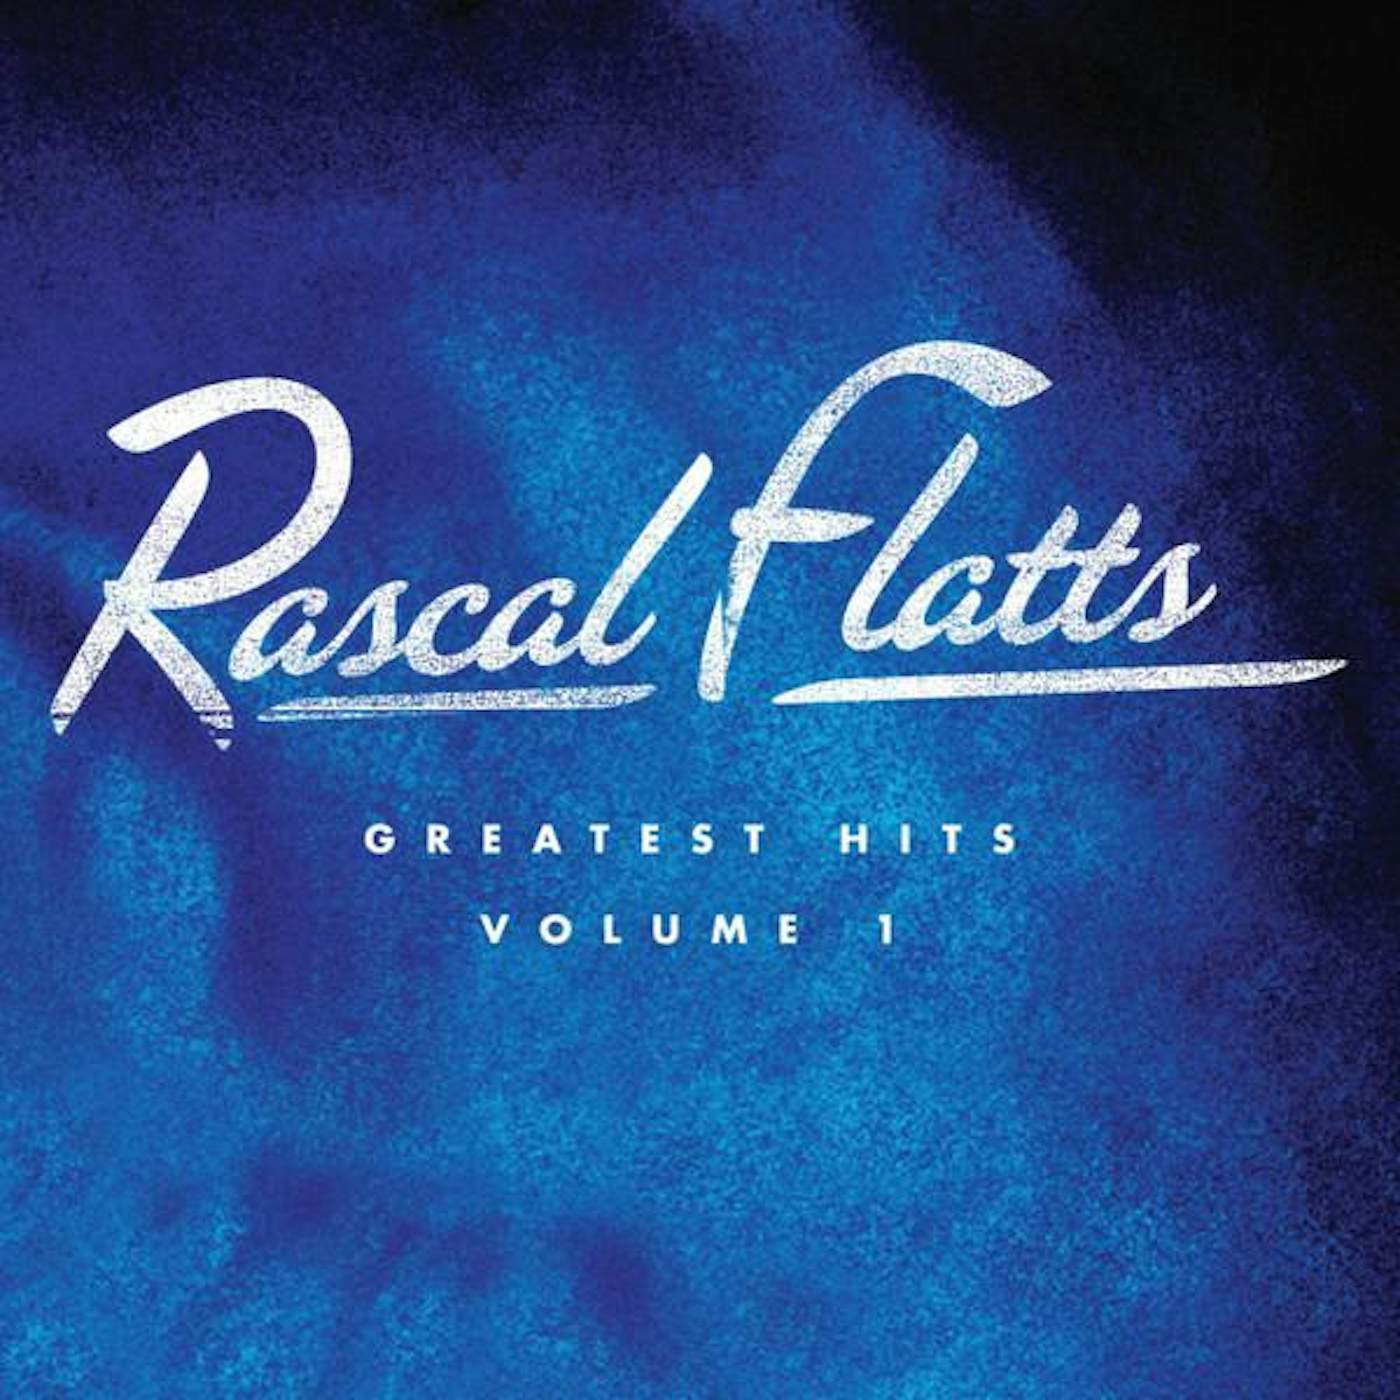 Rascal Flatts GREATEST HITS VOLUME 1 (2 LP) Vinyl Record